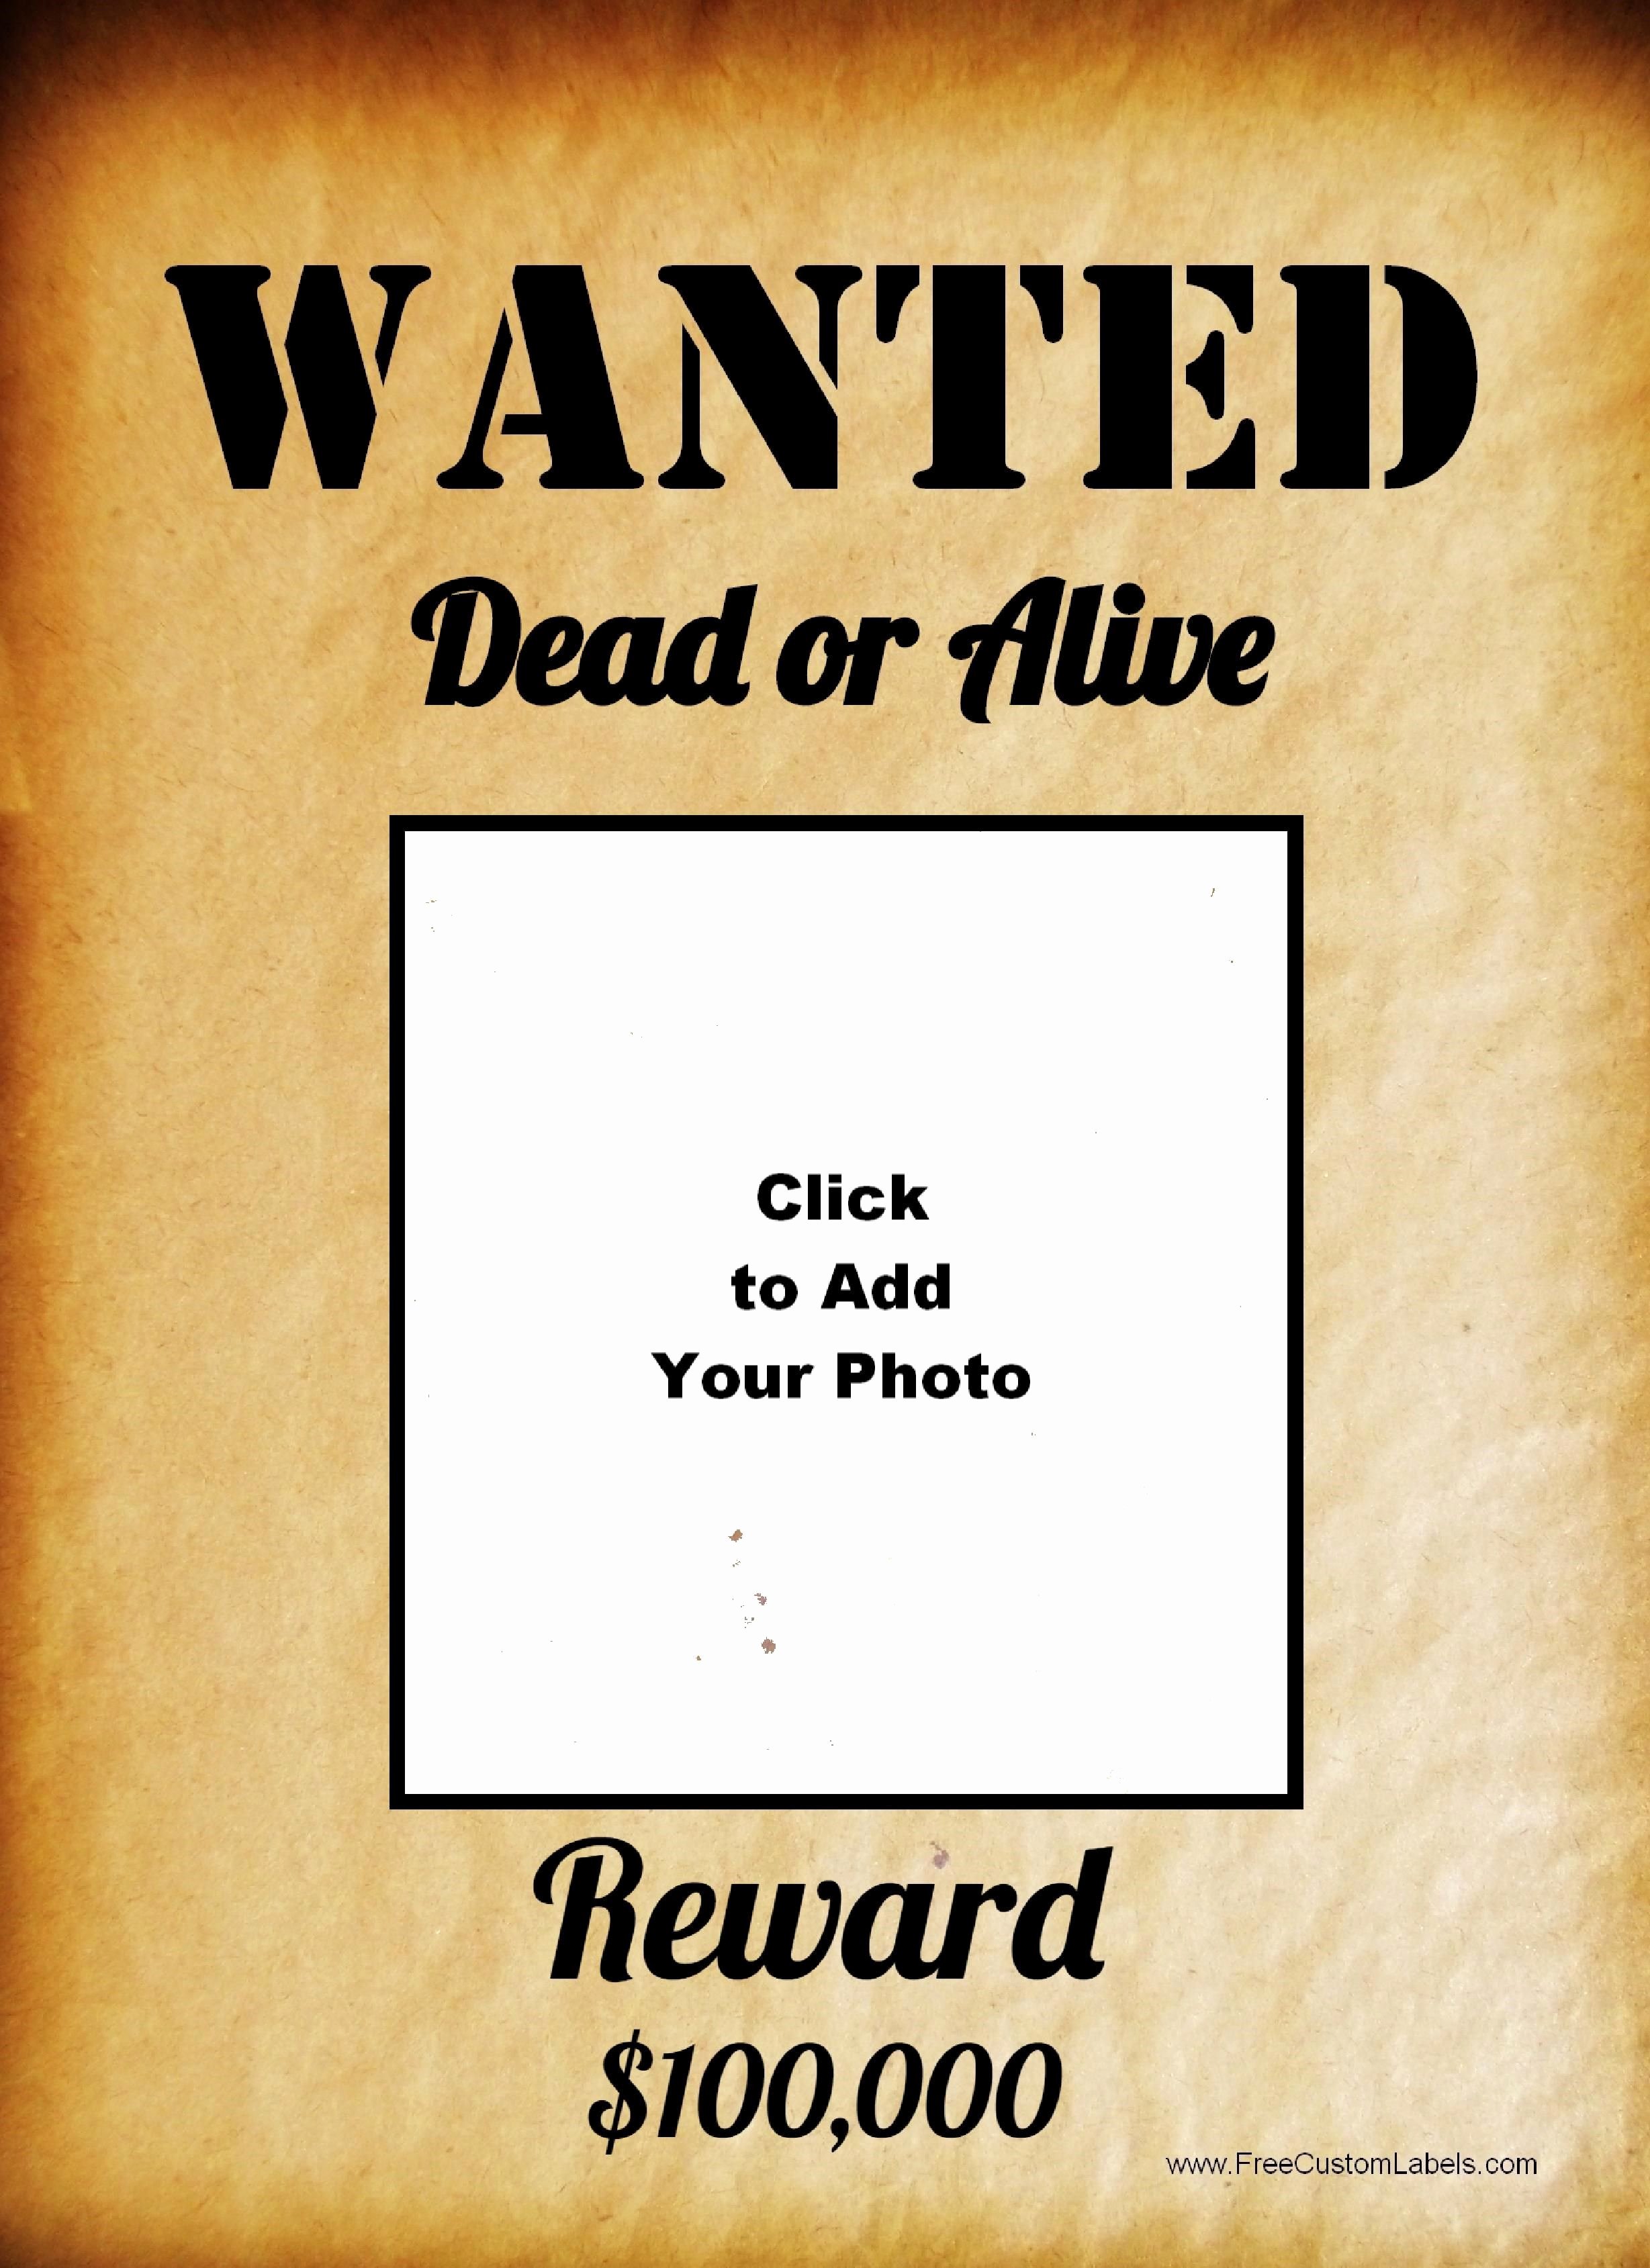 Wanted Poster format Portablegasgrillweber